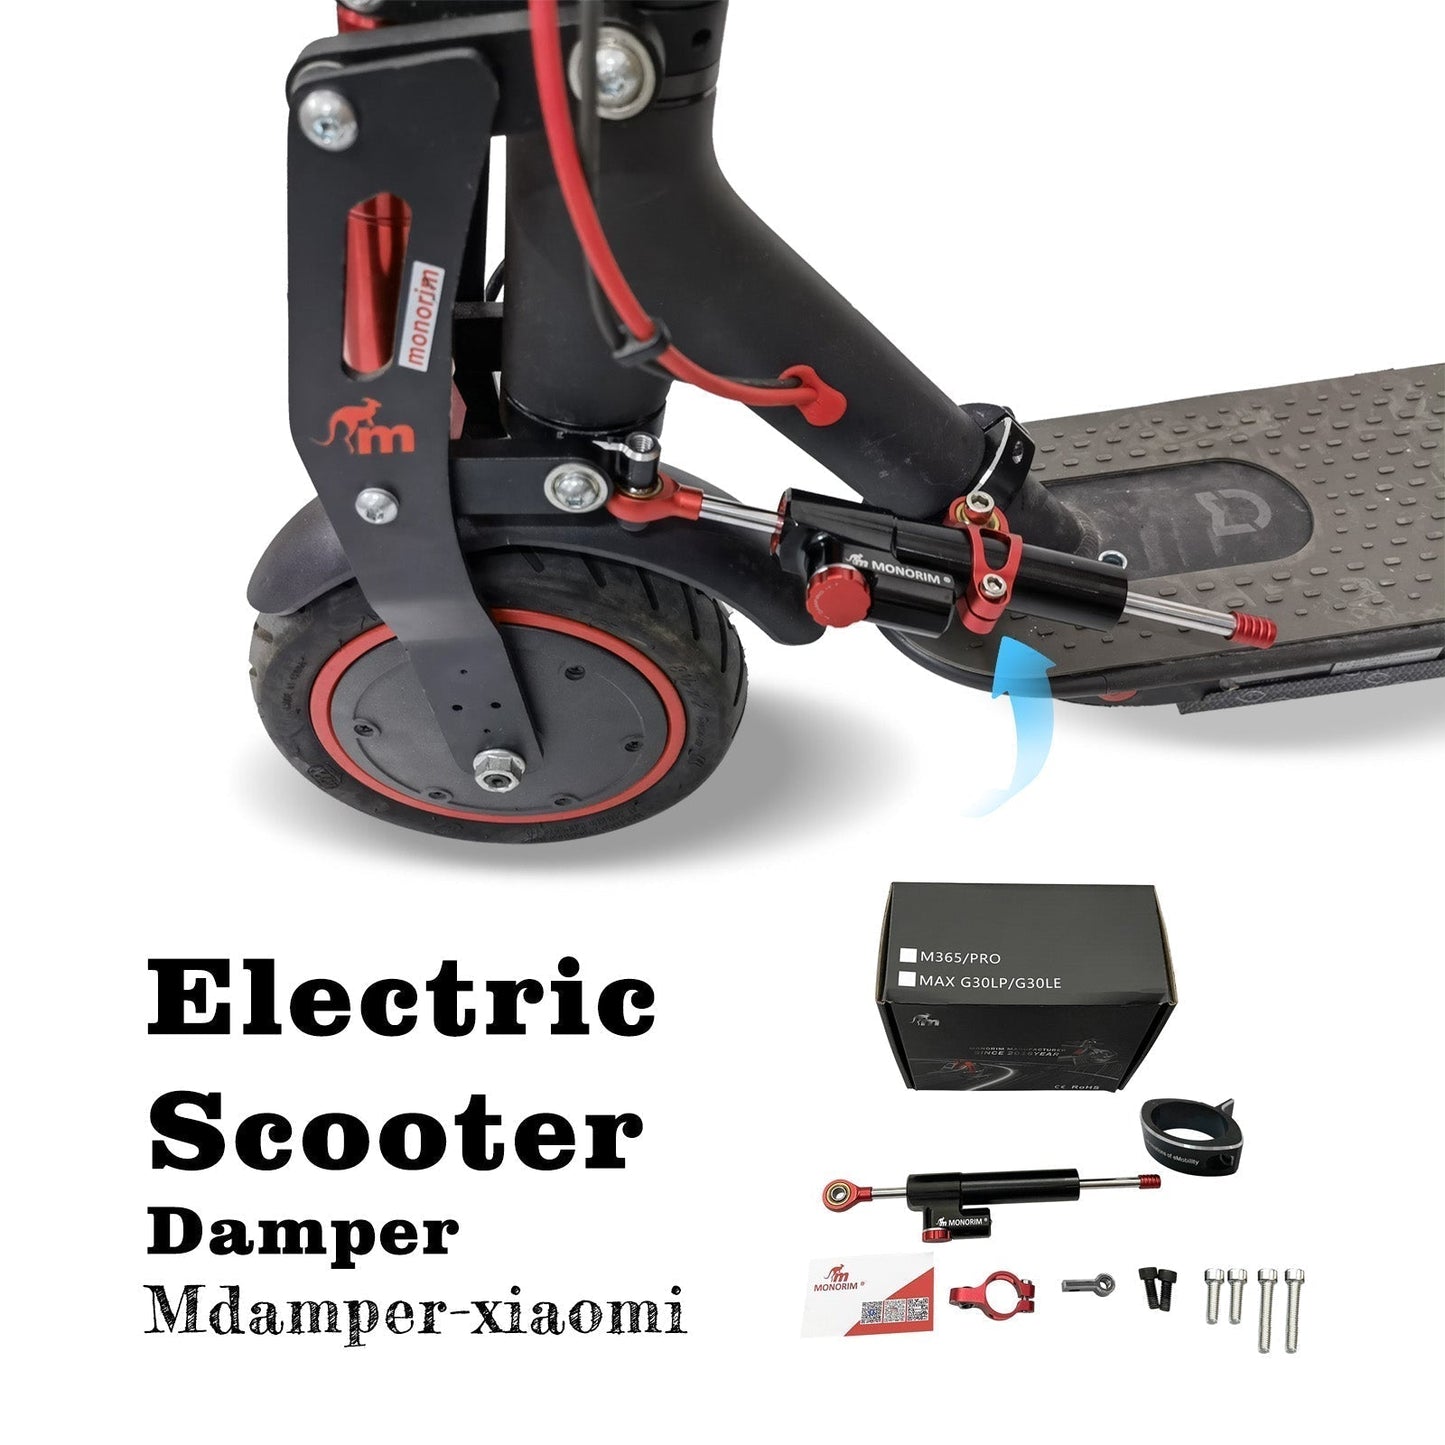 Monorim Steering Damping, Damper for Hiboy s2 pro Scooter, High-speed Stabilizer